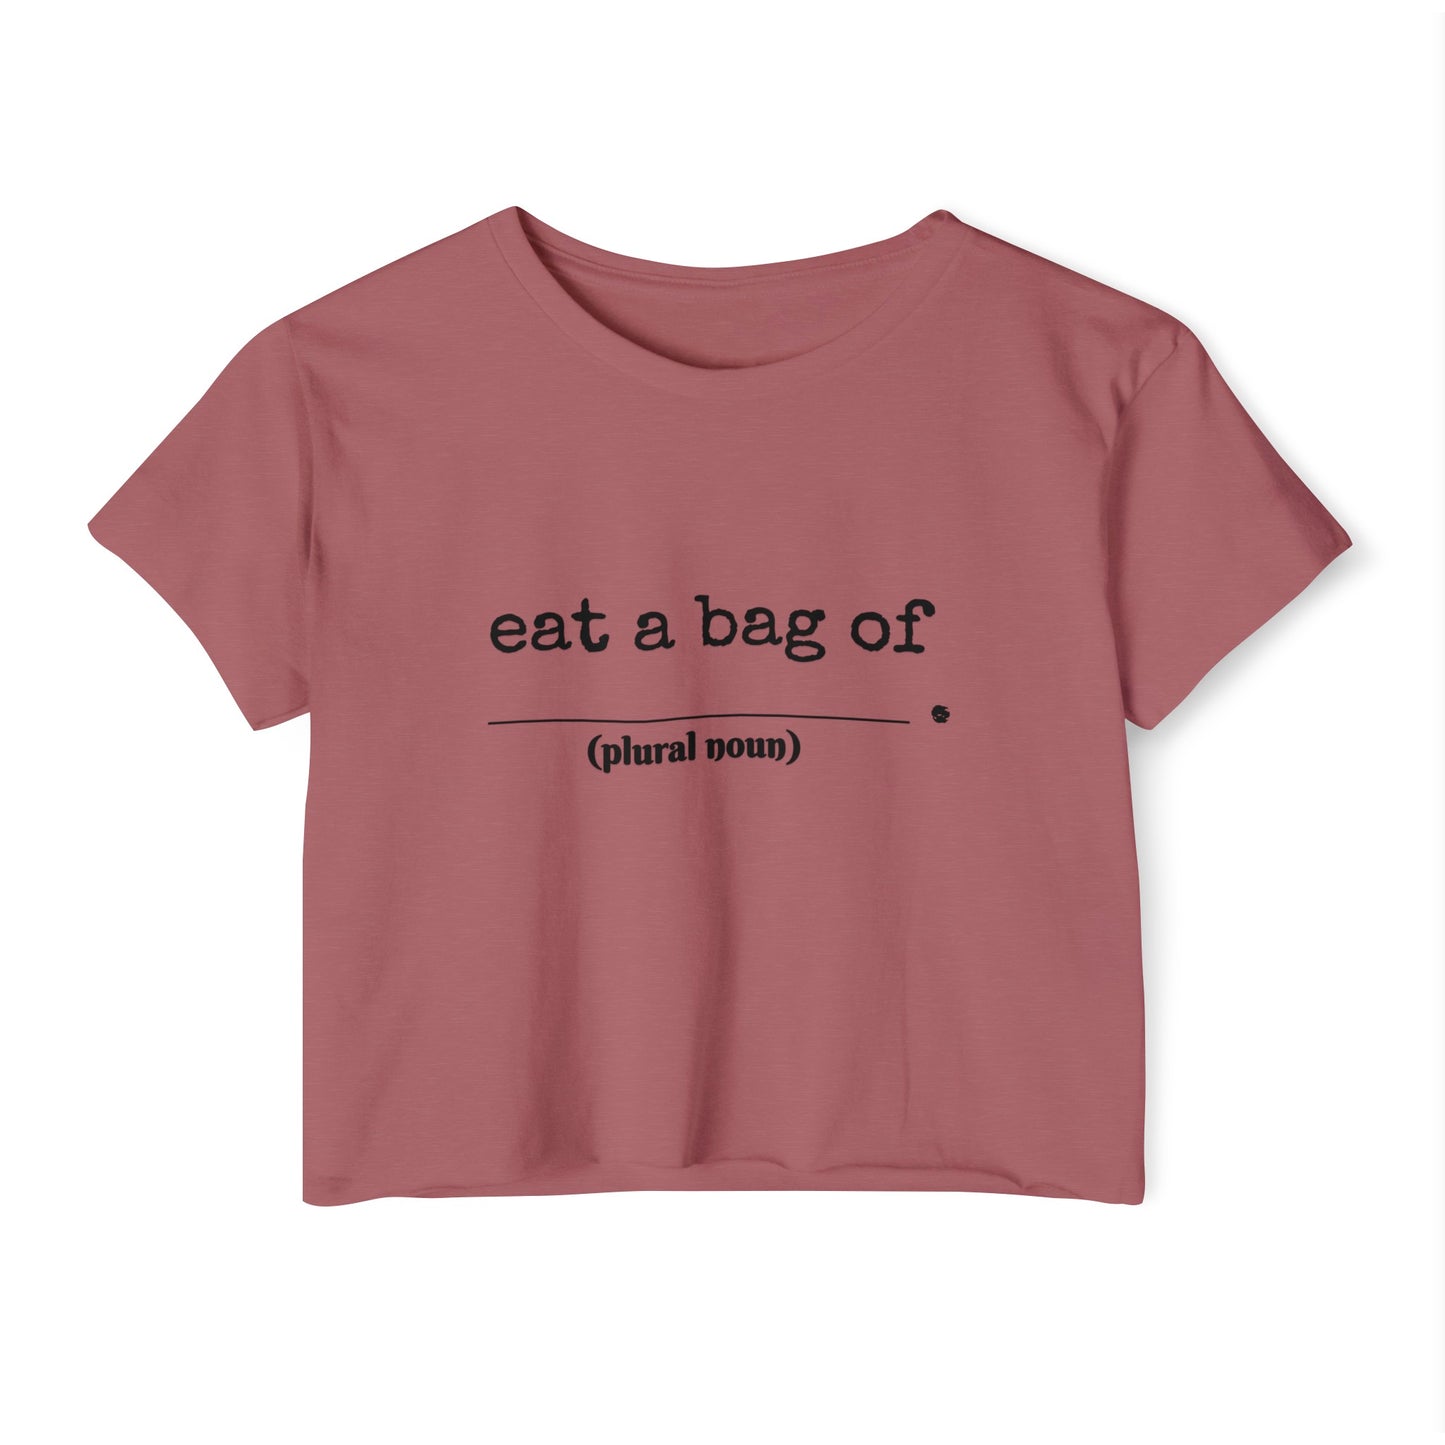 "Eat a bag of________(plural noun)" Cropped Tee